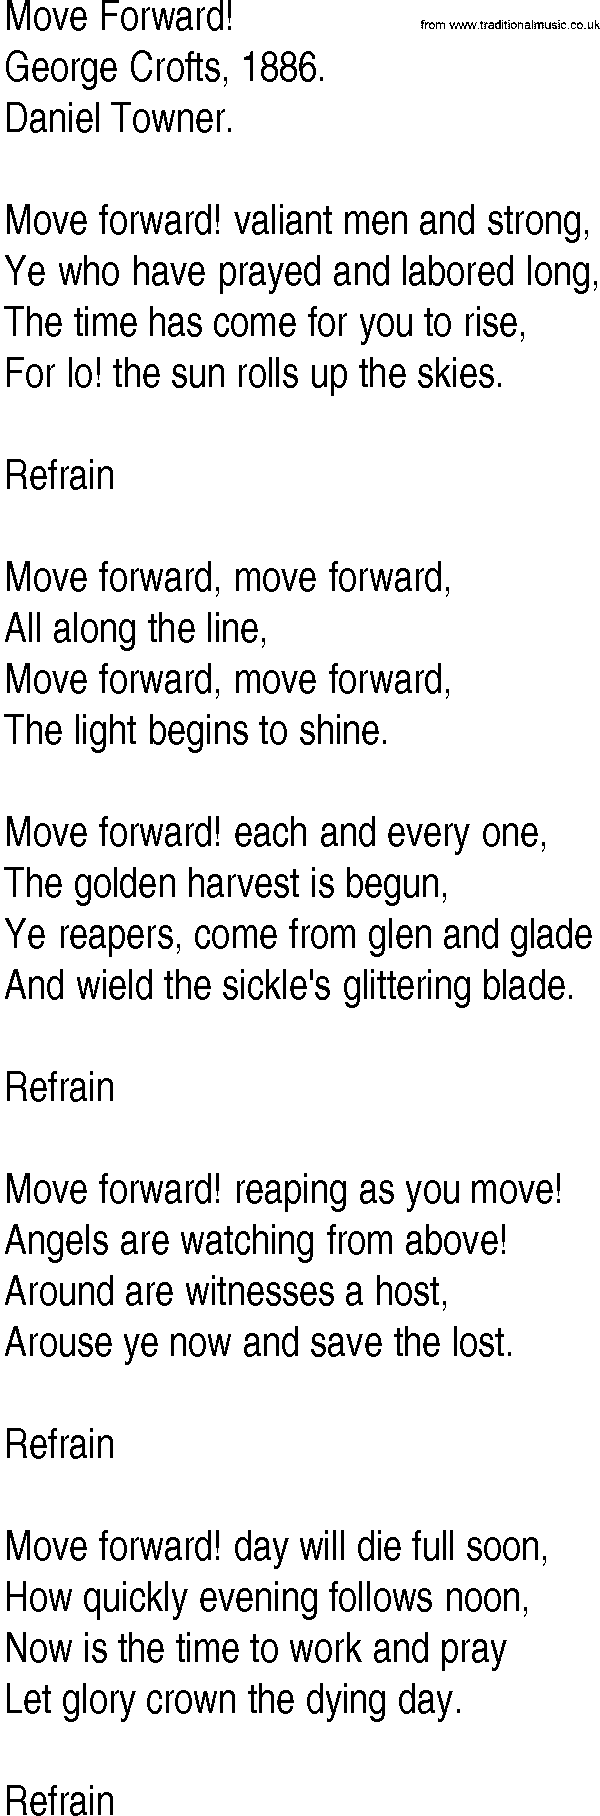 Hymn and Gospel Song: Move Forward! by George Crofts lyrics